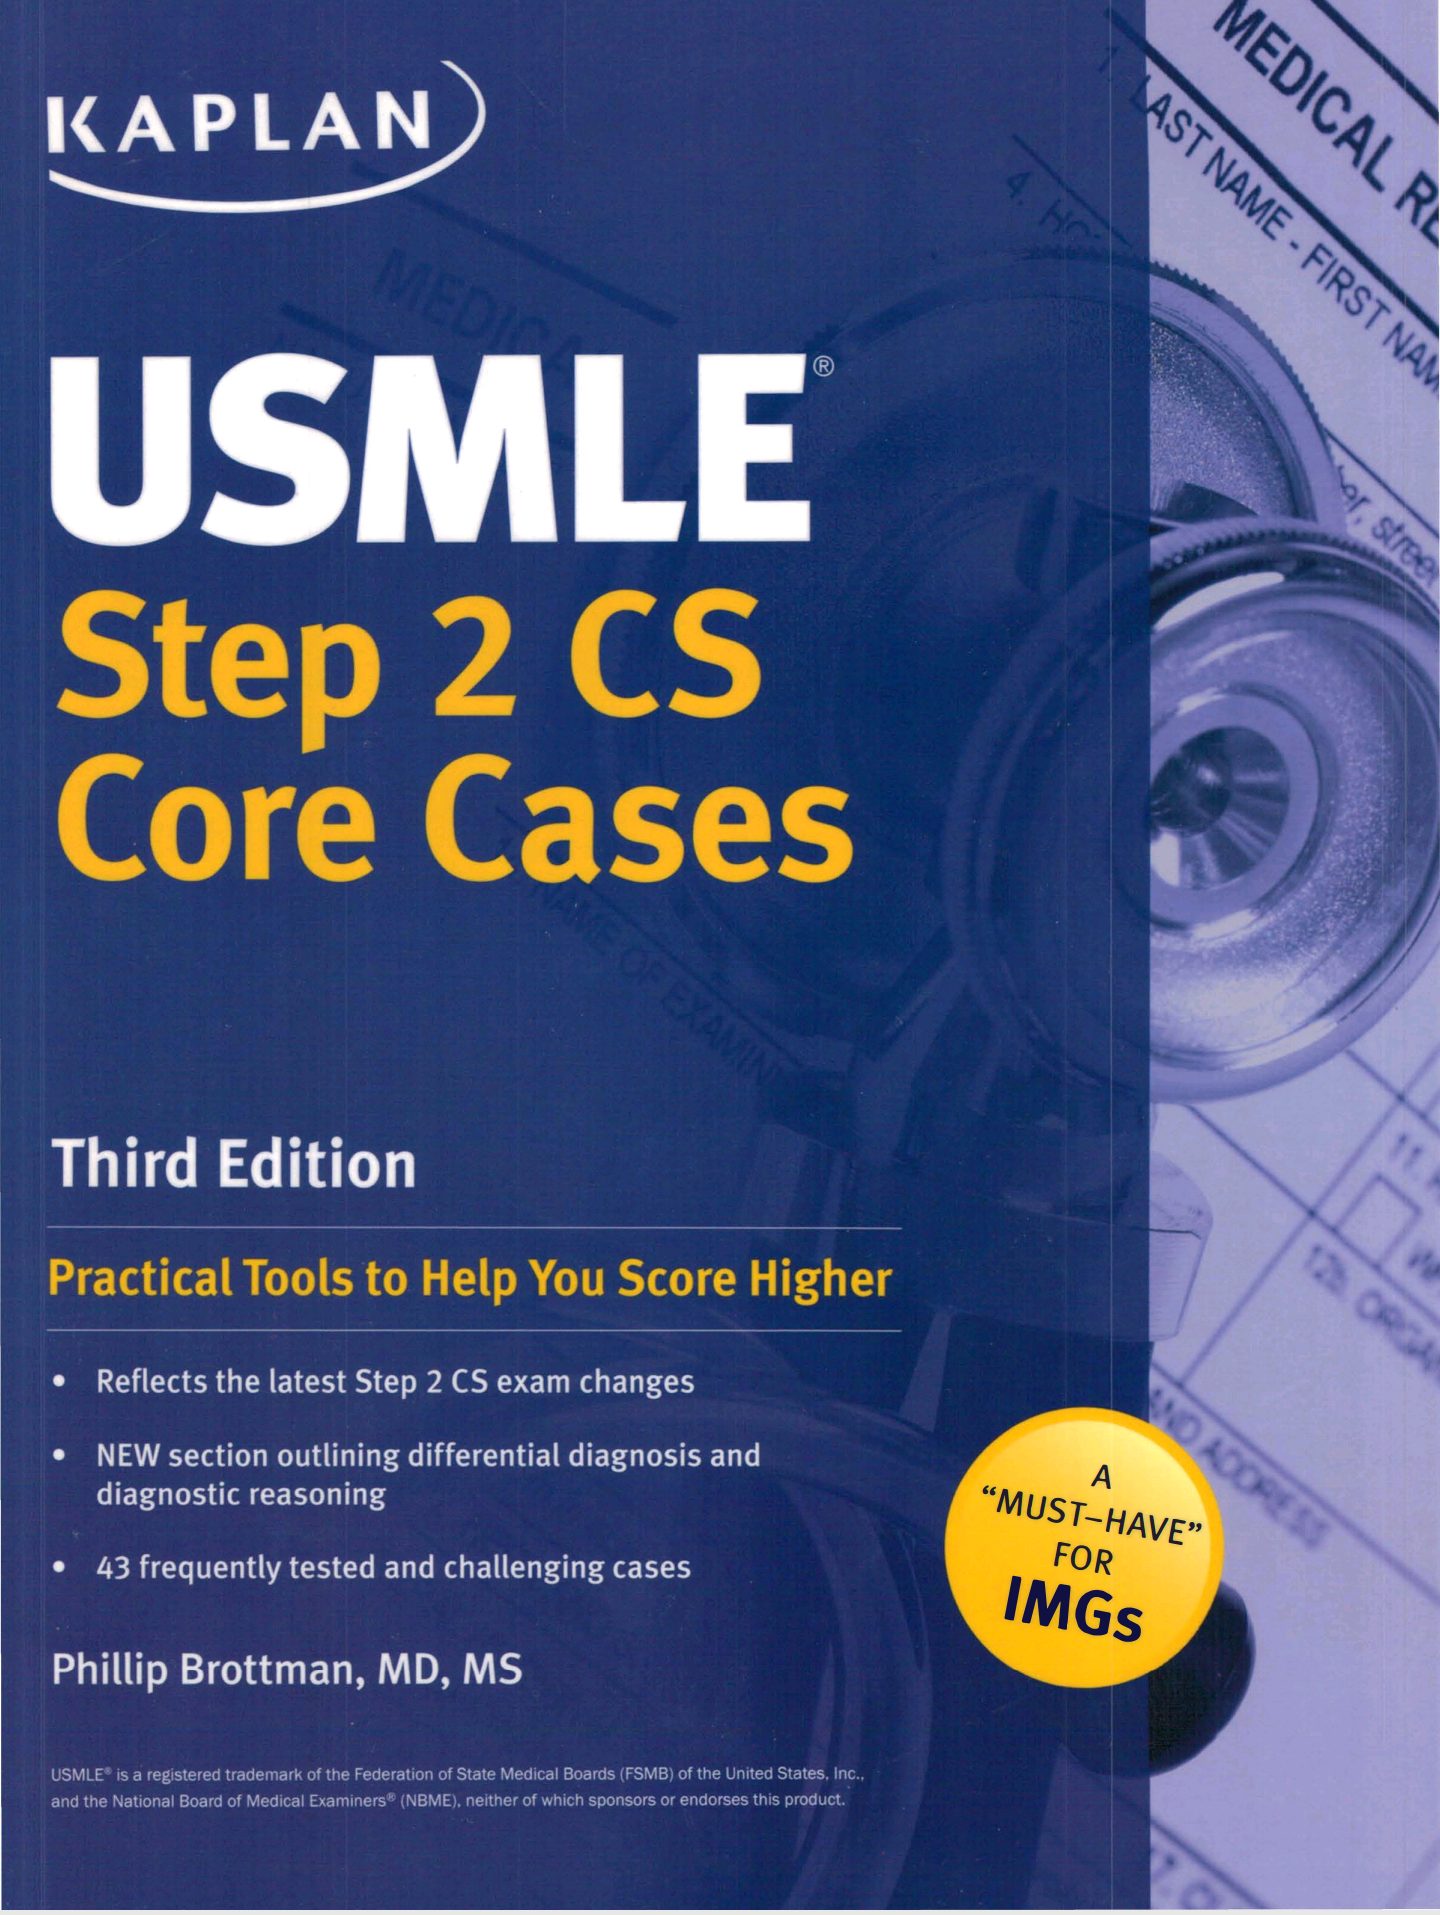 USMLE Step 2 CS Core Cases Third Edition